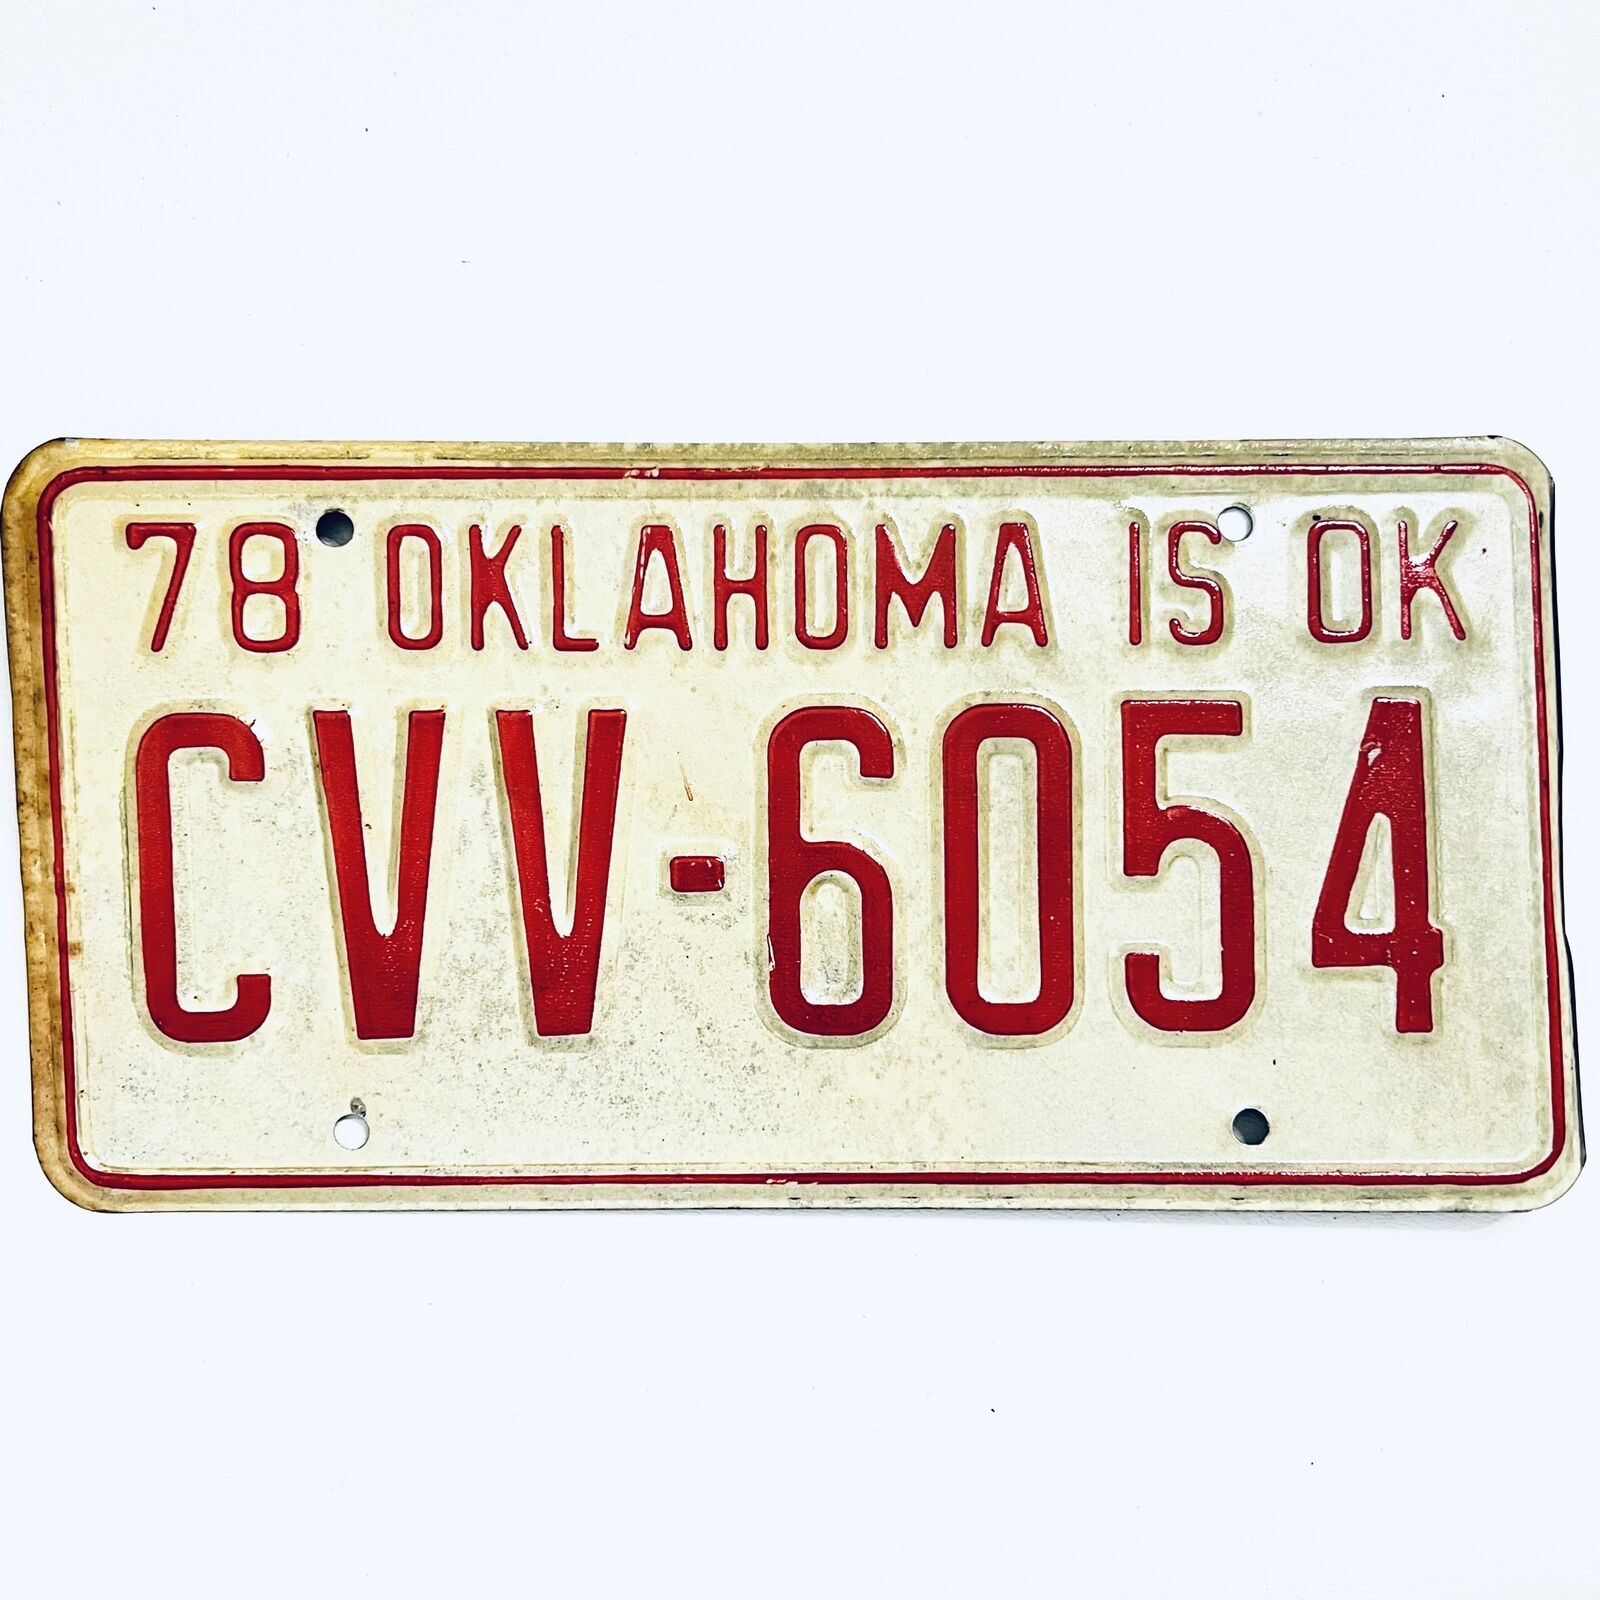 1978 United States Oklahoma Oklahoma is OK Passenger License Plate CVV-6054